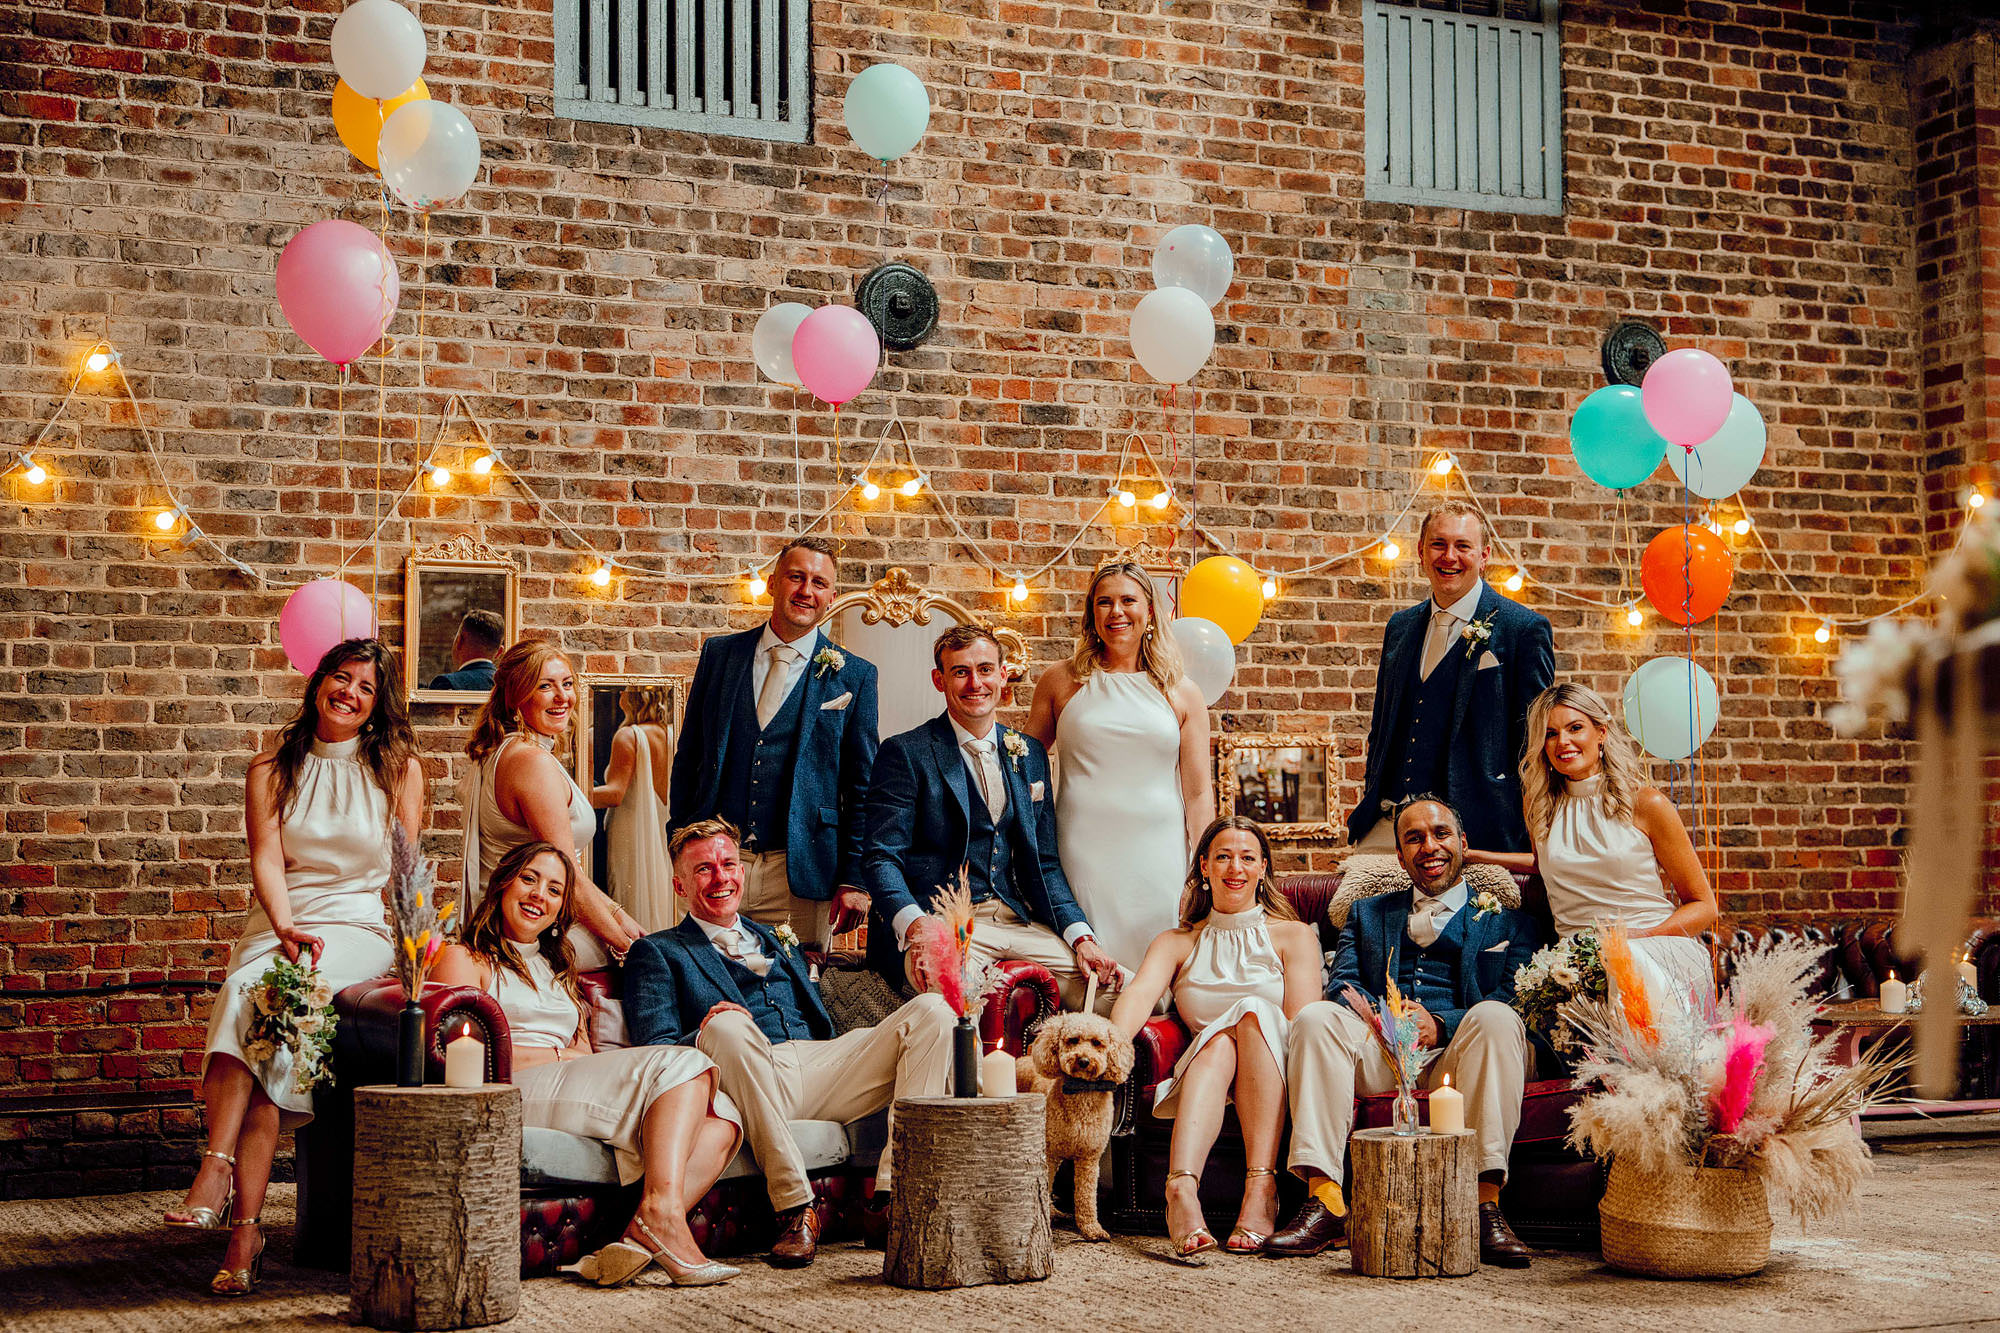 Colourful wedding photography york venues hamish irvine 